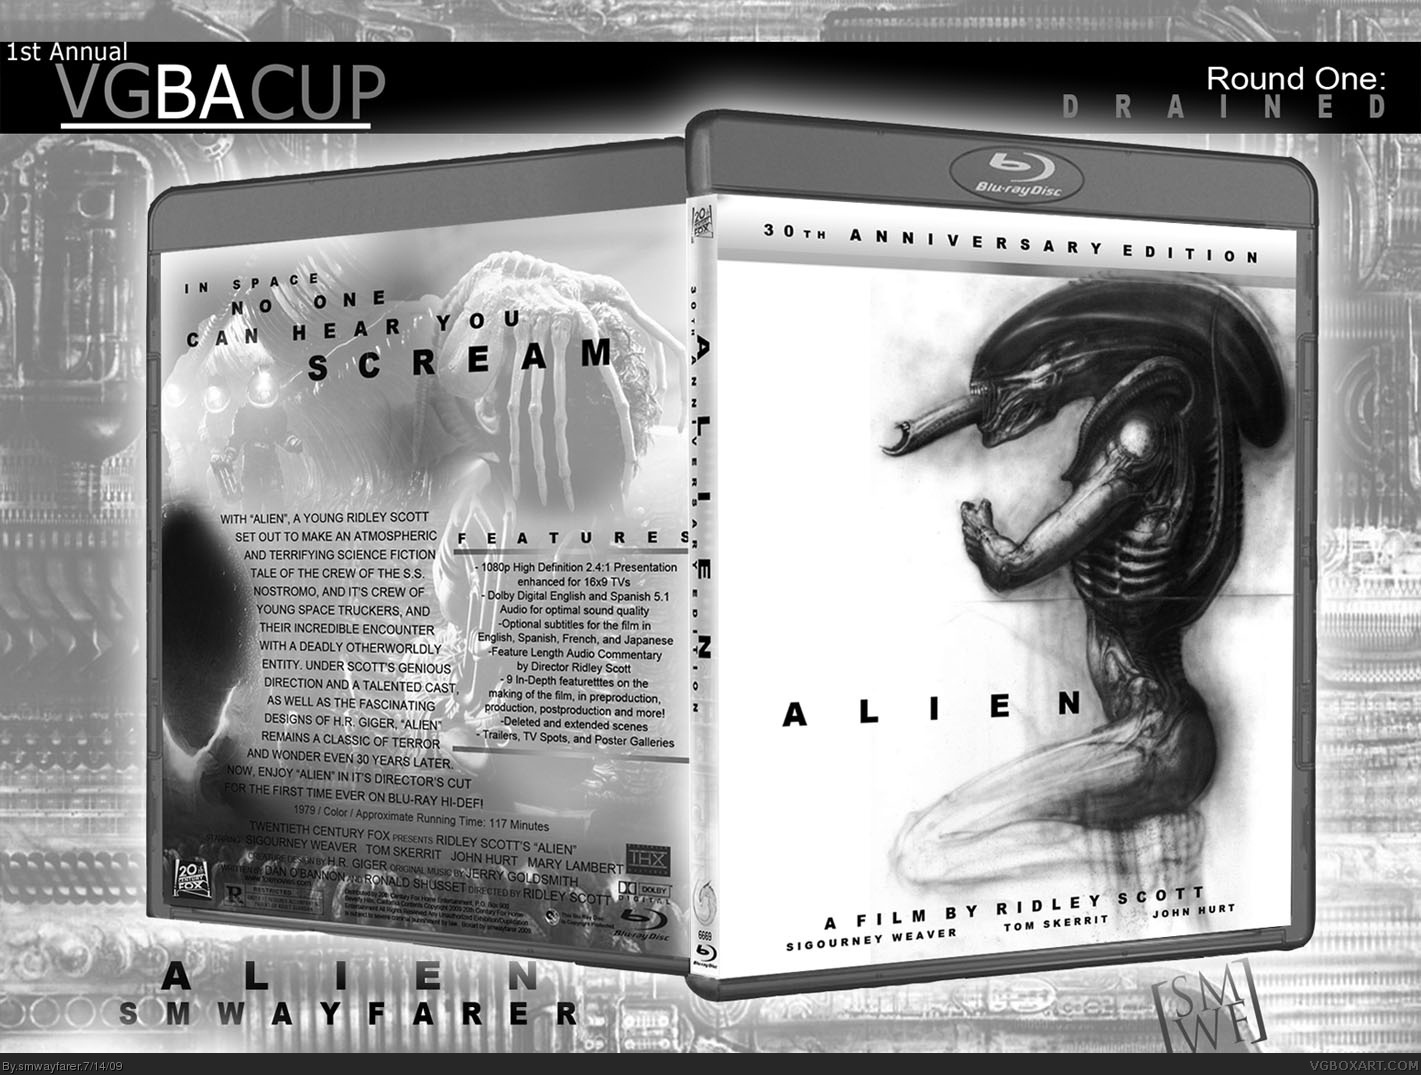 Alien box cover